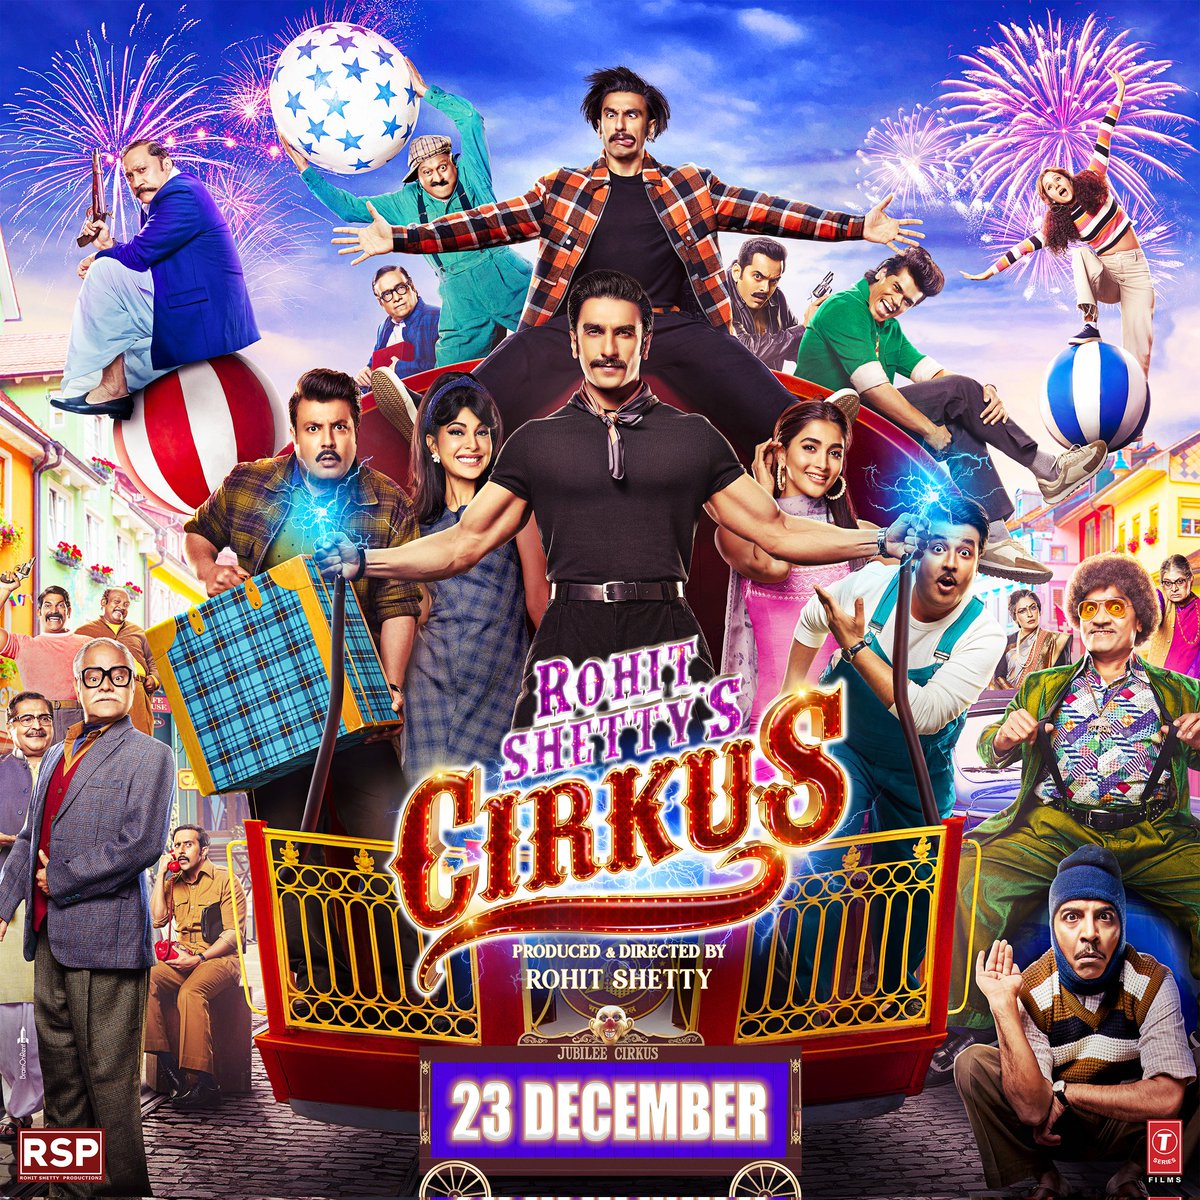 #CirkusThisChristmas In Cinemas 23rd December. #CirkusThisChristmas #RohitShetty @rs_productionz @TSeries @RanveerOfficial @varunsharma90 @hegdepooja @Asli_Jacqueline